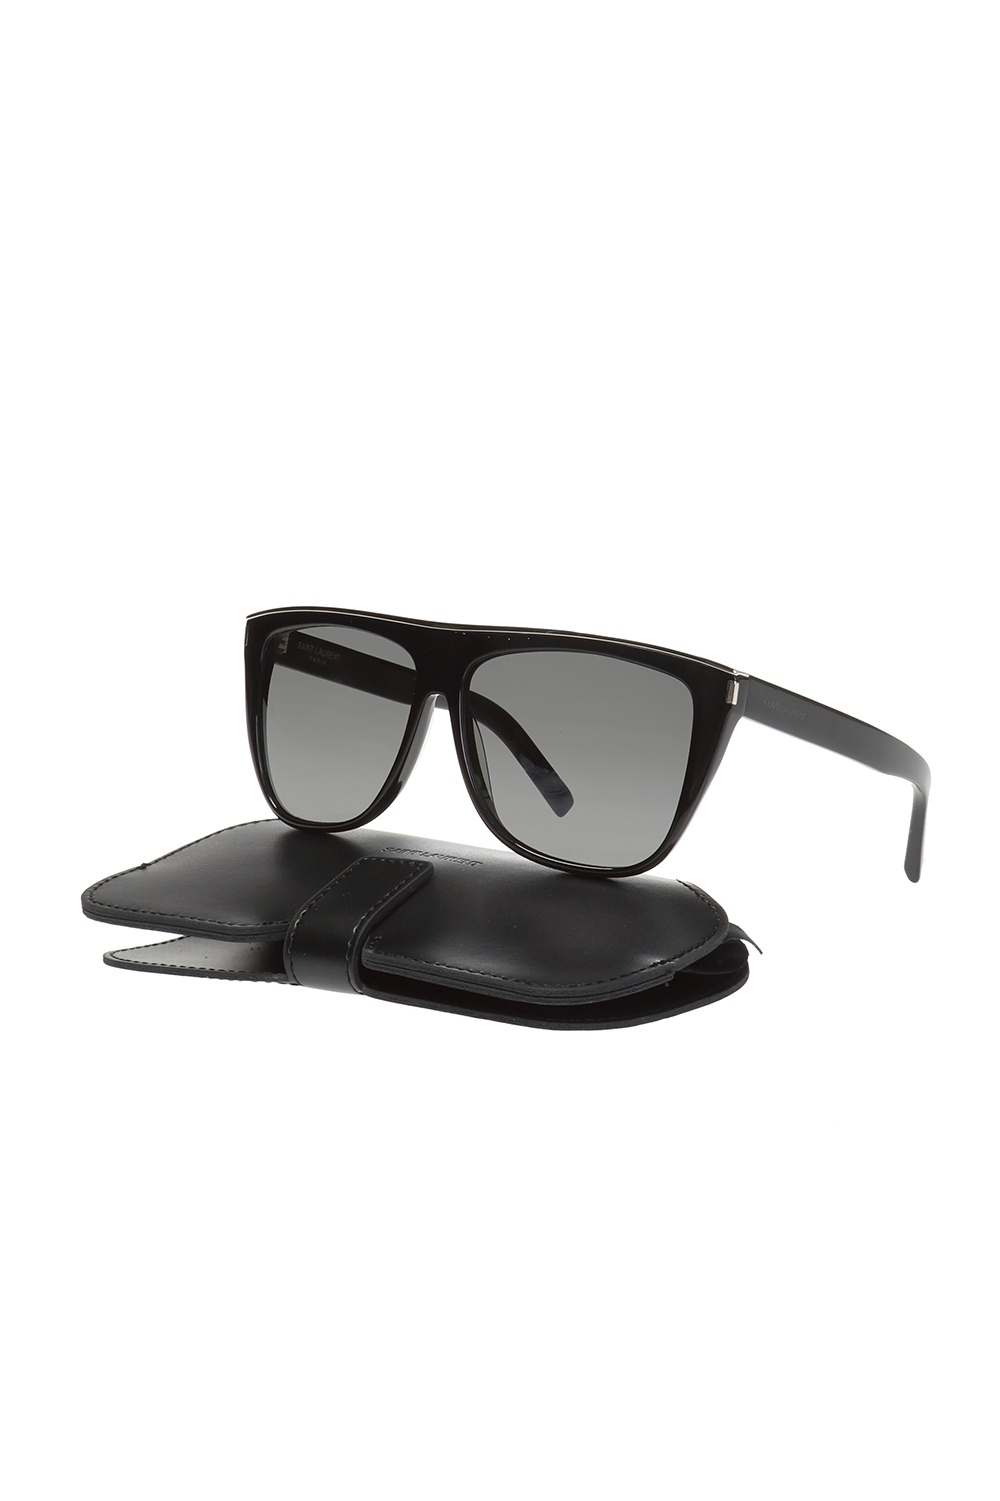 New Wave SL 1' sunglasses Saint Laurent - Vitkac Canada